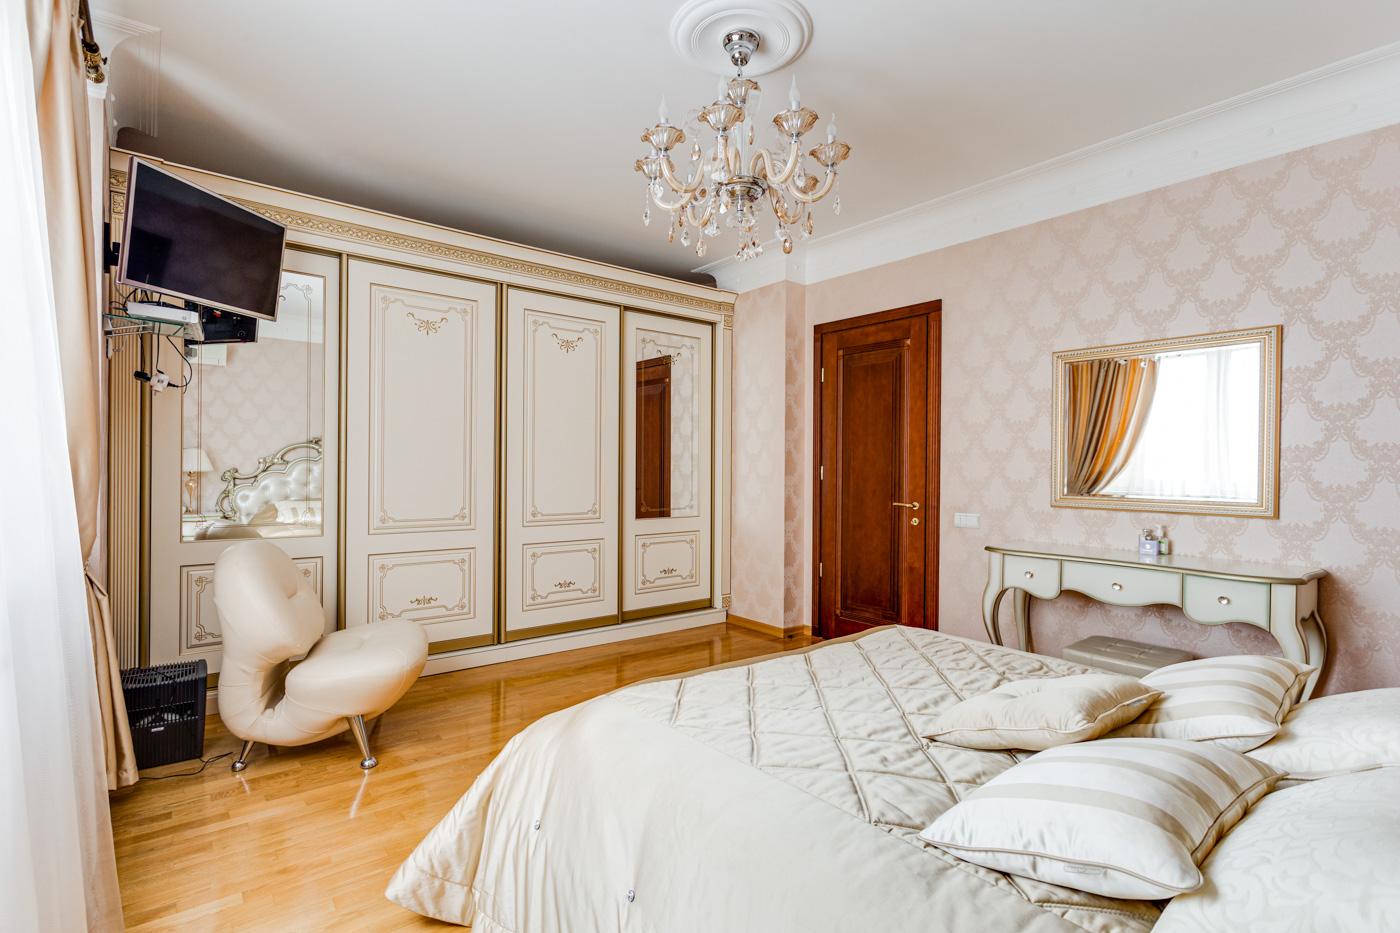 Купить квартиру до 1000000 рублей